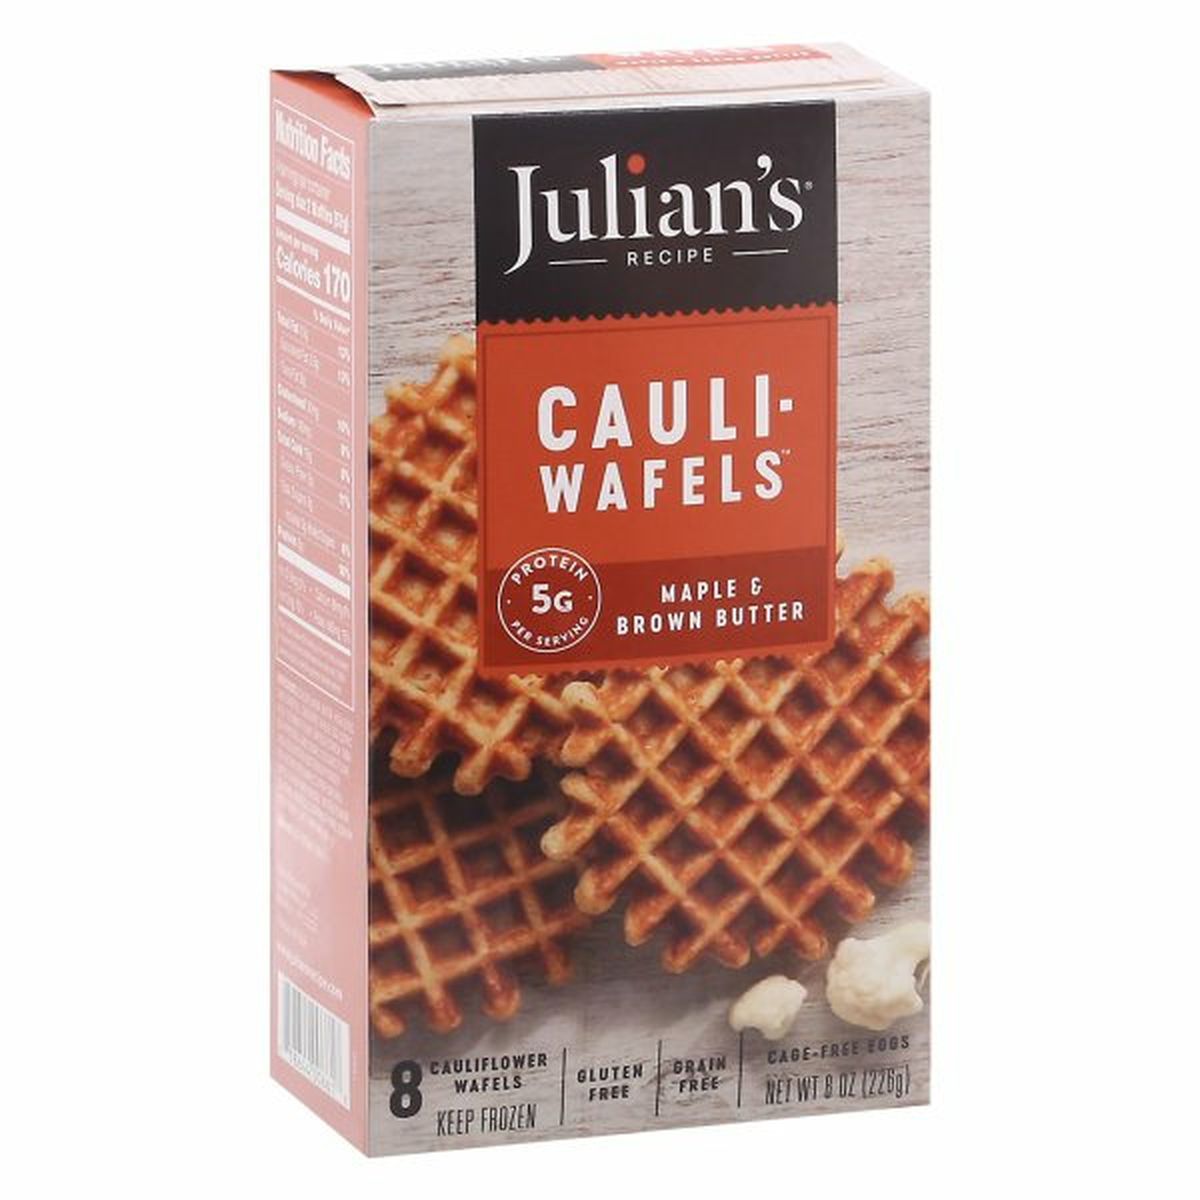 Calories in Julian's Recipe Cauli-Wafels, Maple & Brown Butter